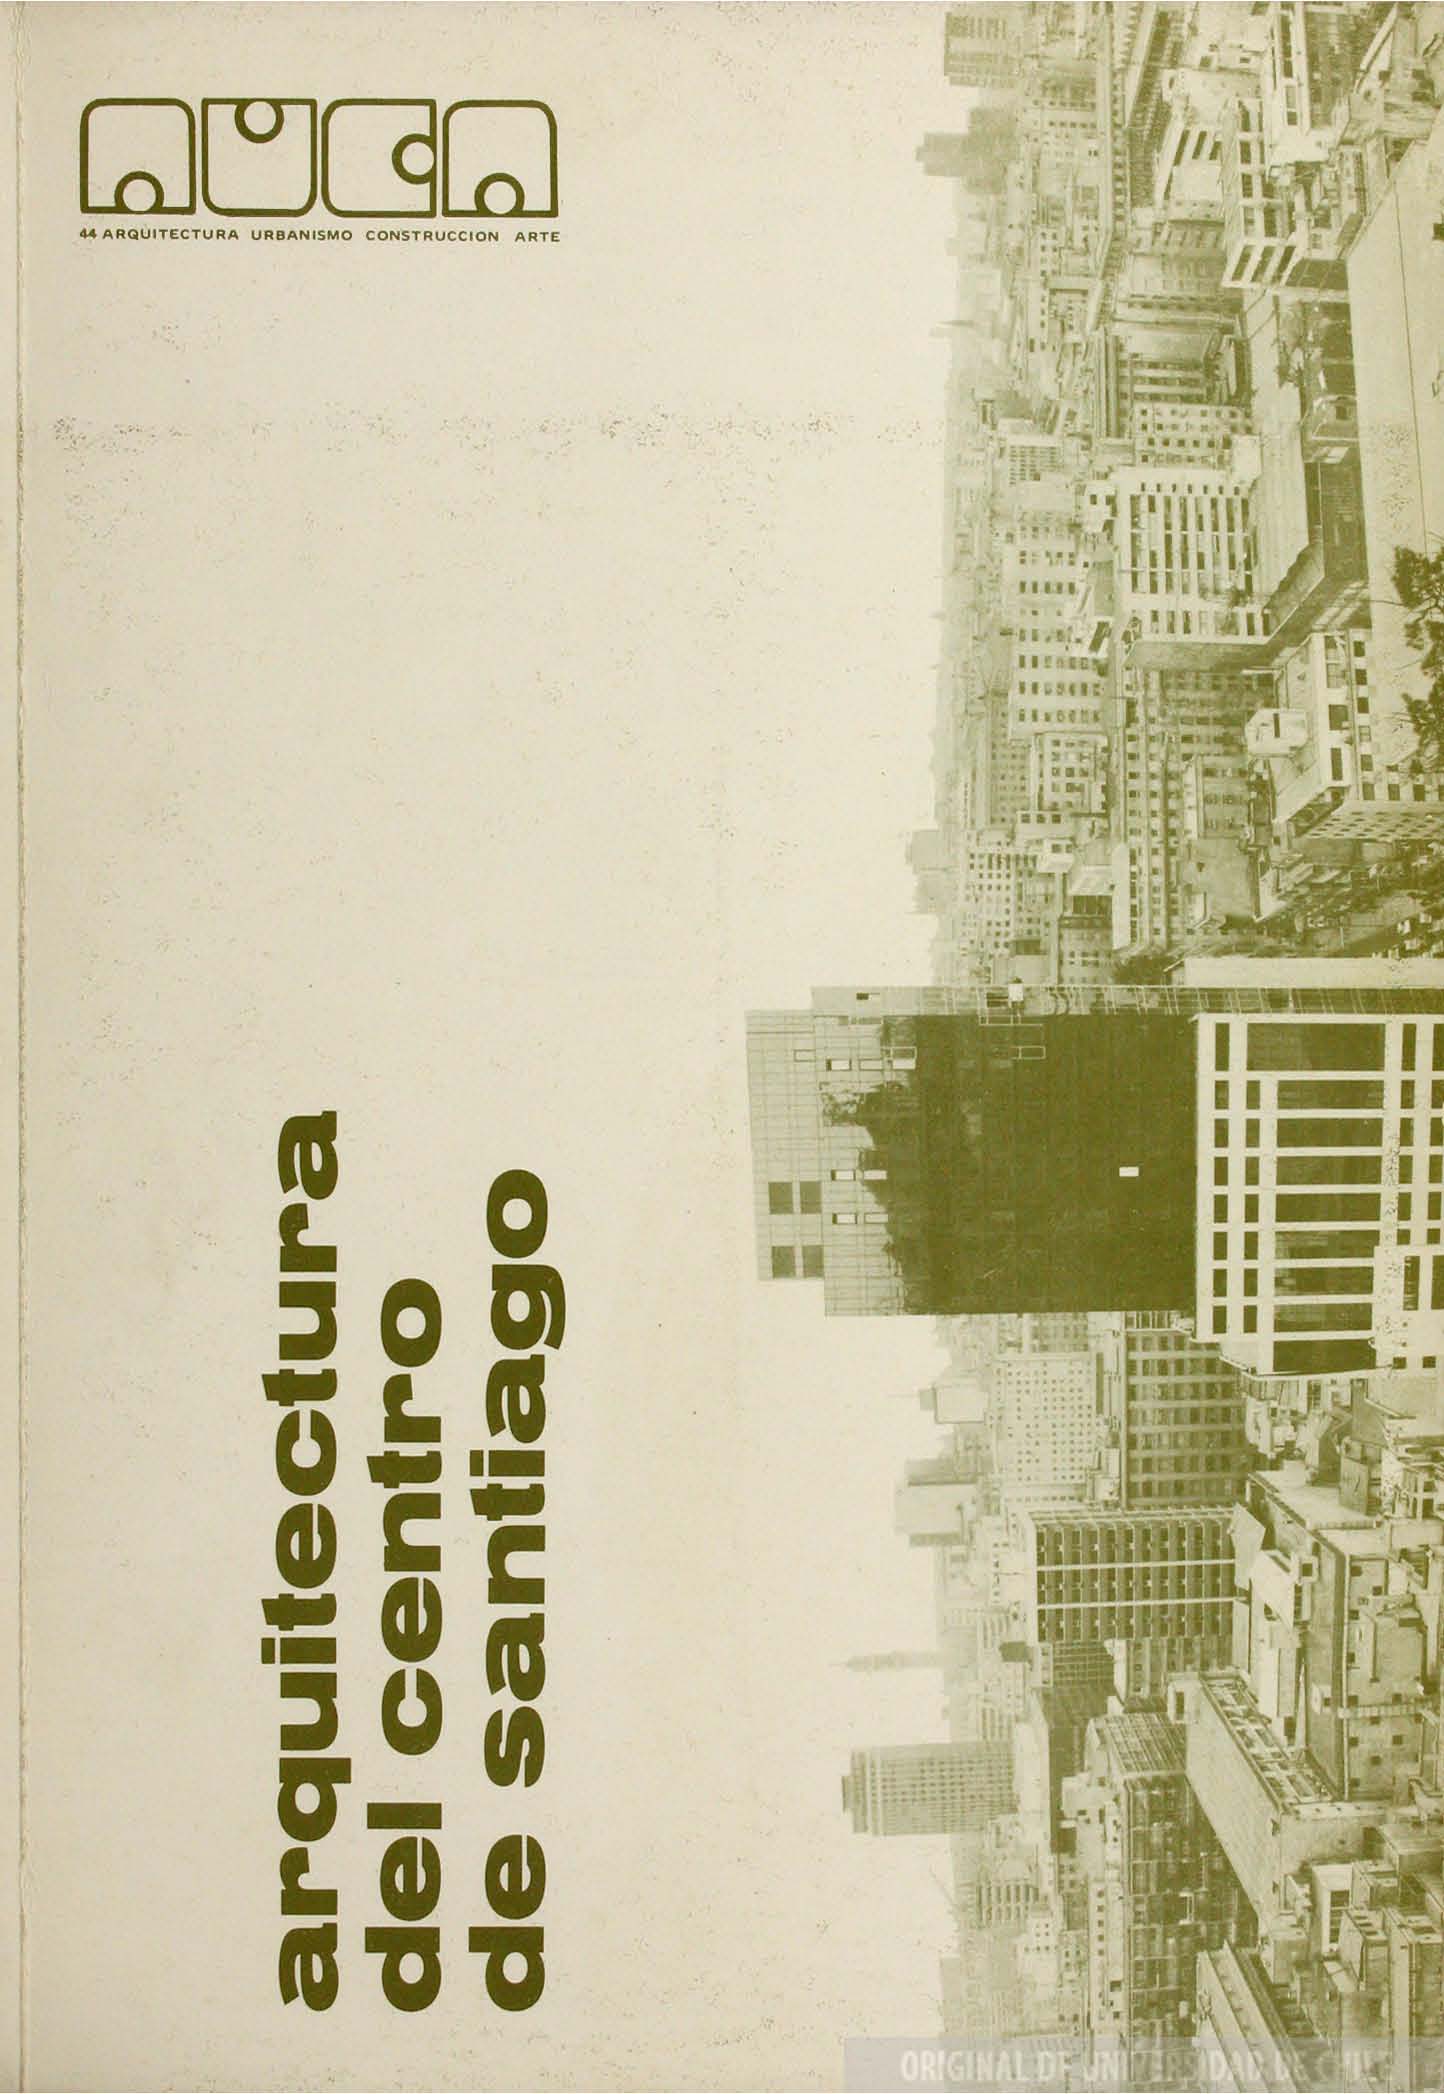 											Ver Núm. 44 (1982): Arquitectura del Centro de Santiago
										